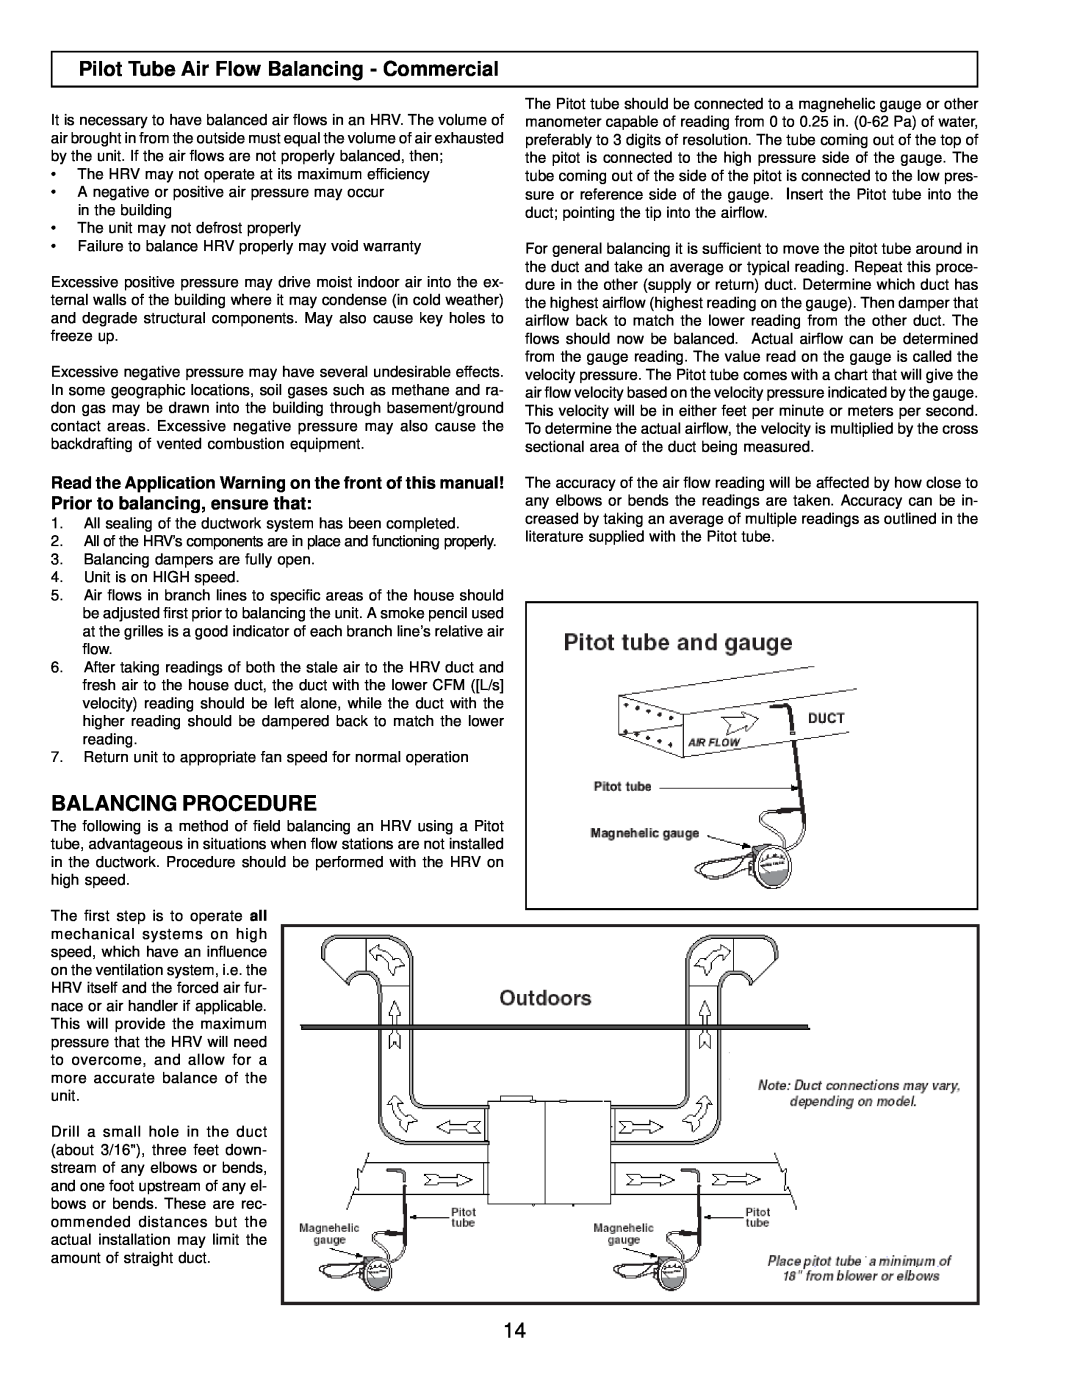 American Aldes 1500 SFDE, HRV 1500 SFD installation manual Balancing Procedure, Pilot Tube Air Flow Balancing - Commercial 